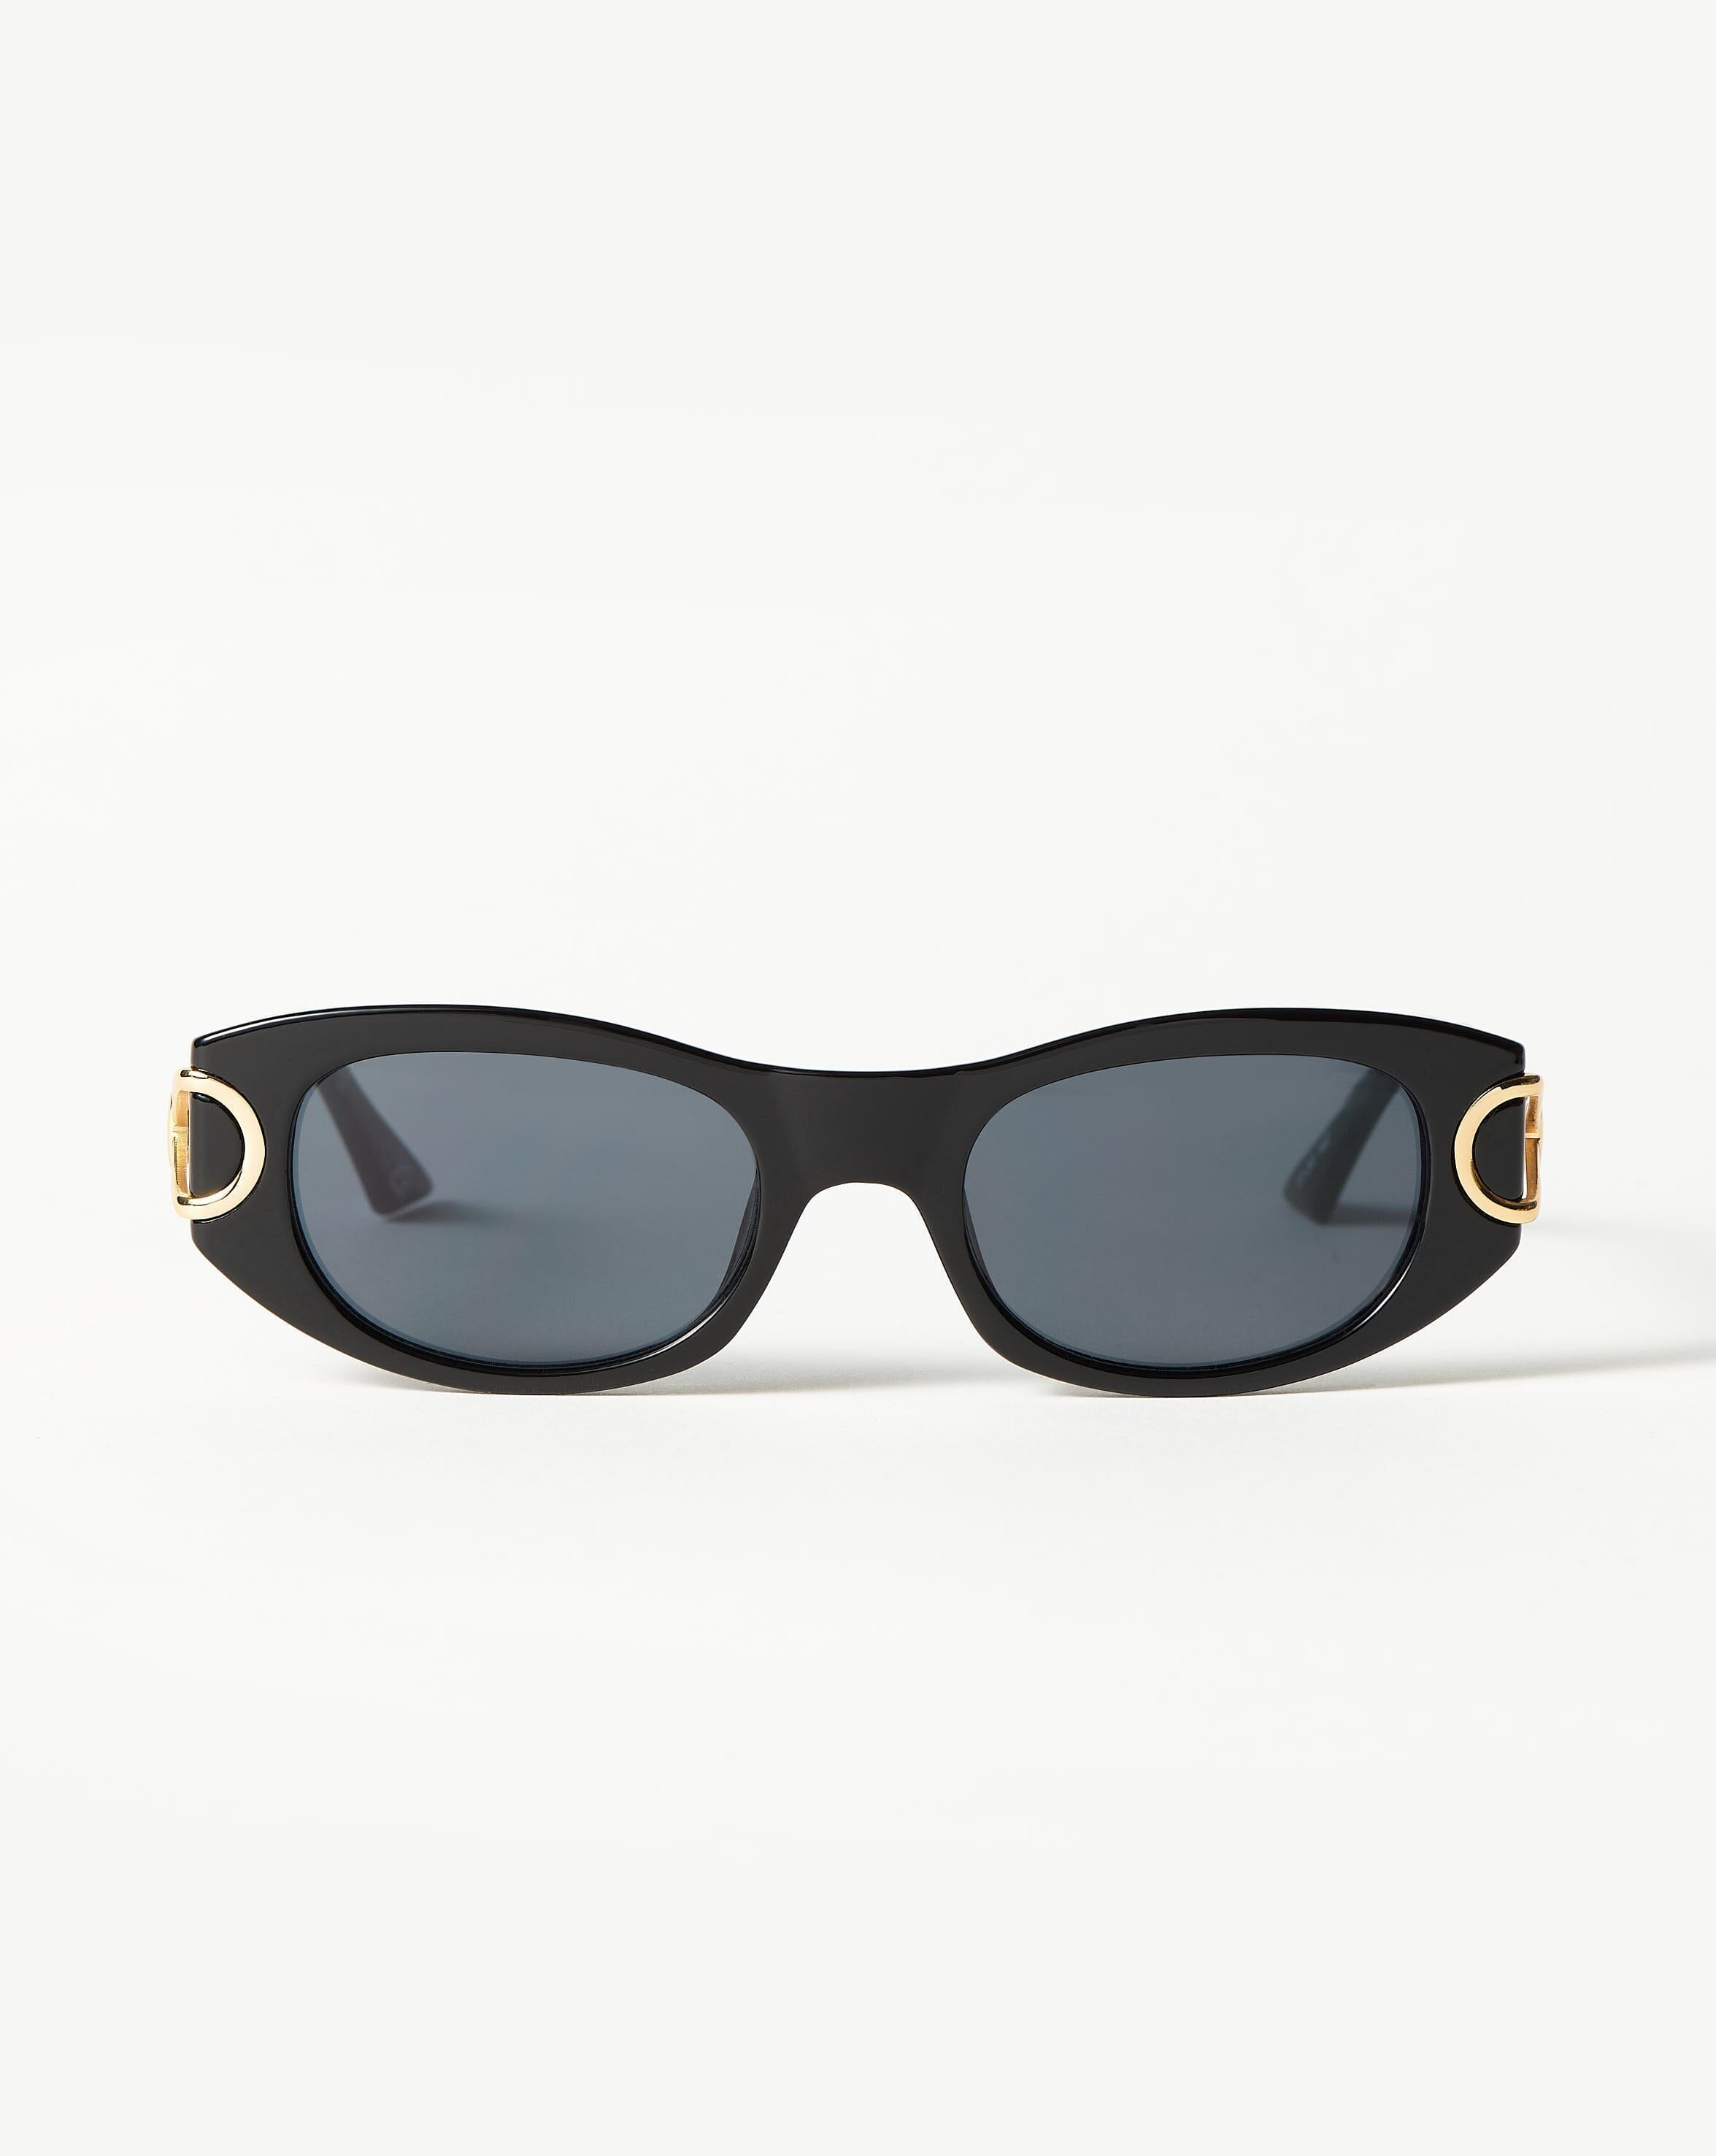 Missoma Le Specs Serpens Link Cat-Eye Sunglasses Sage